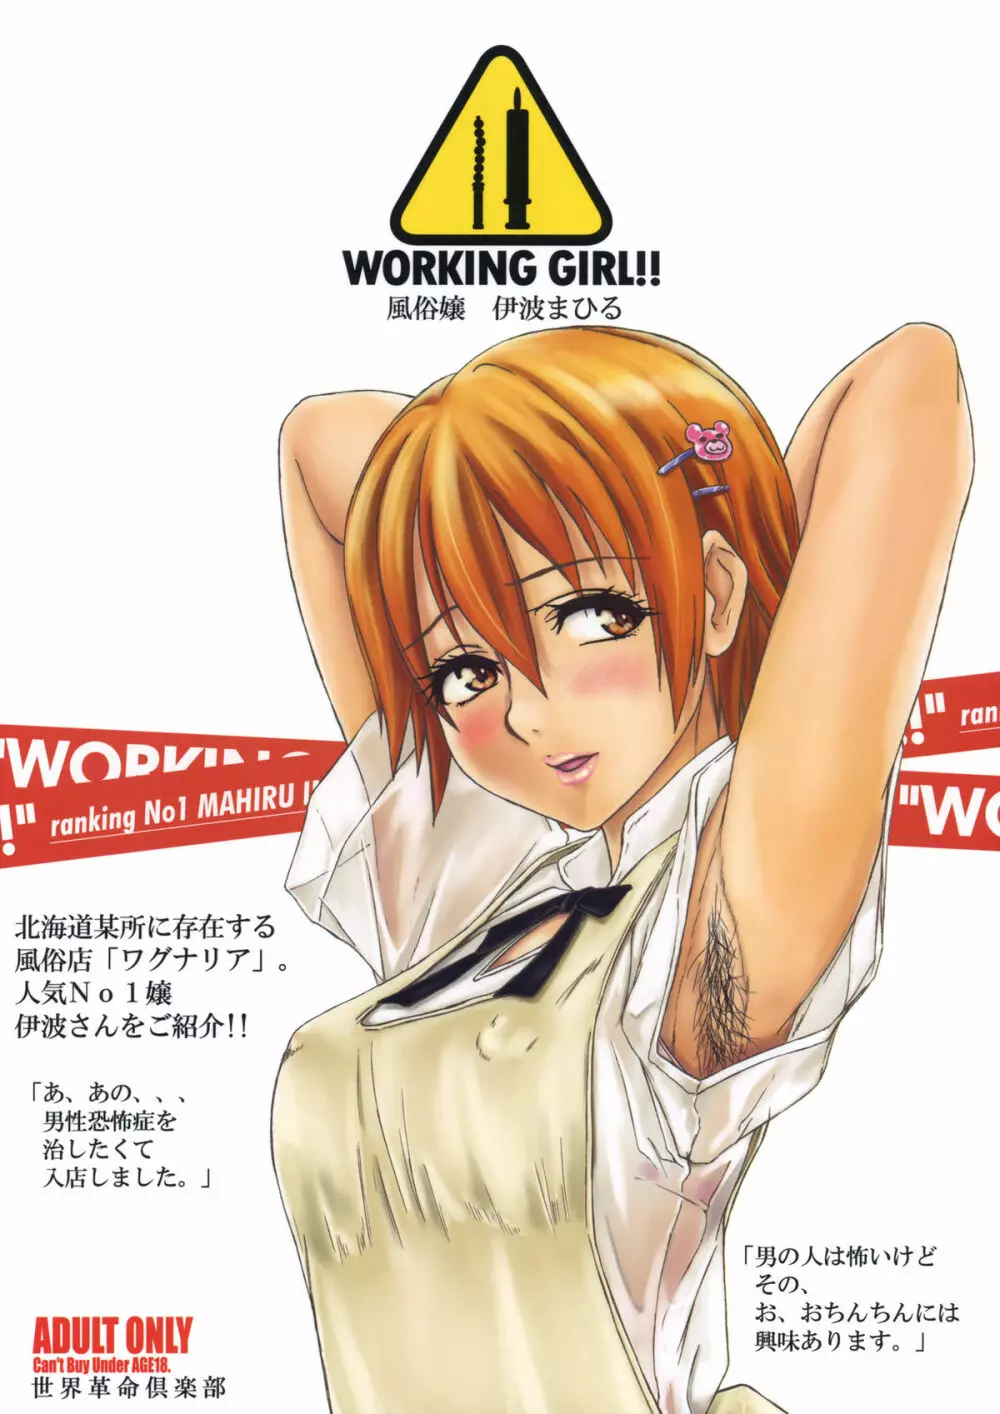 WORKING GIRL!! ranking No 1 風俗嬢 伊波まひる 38ページ